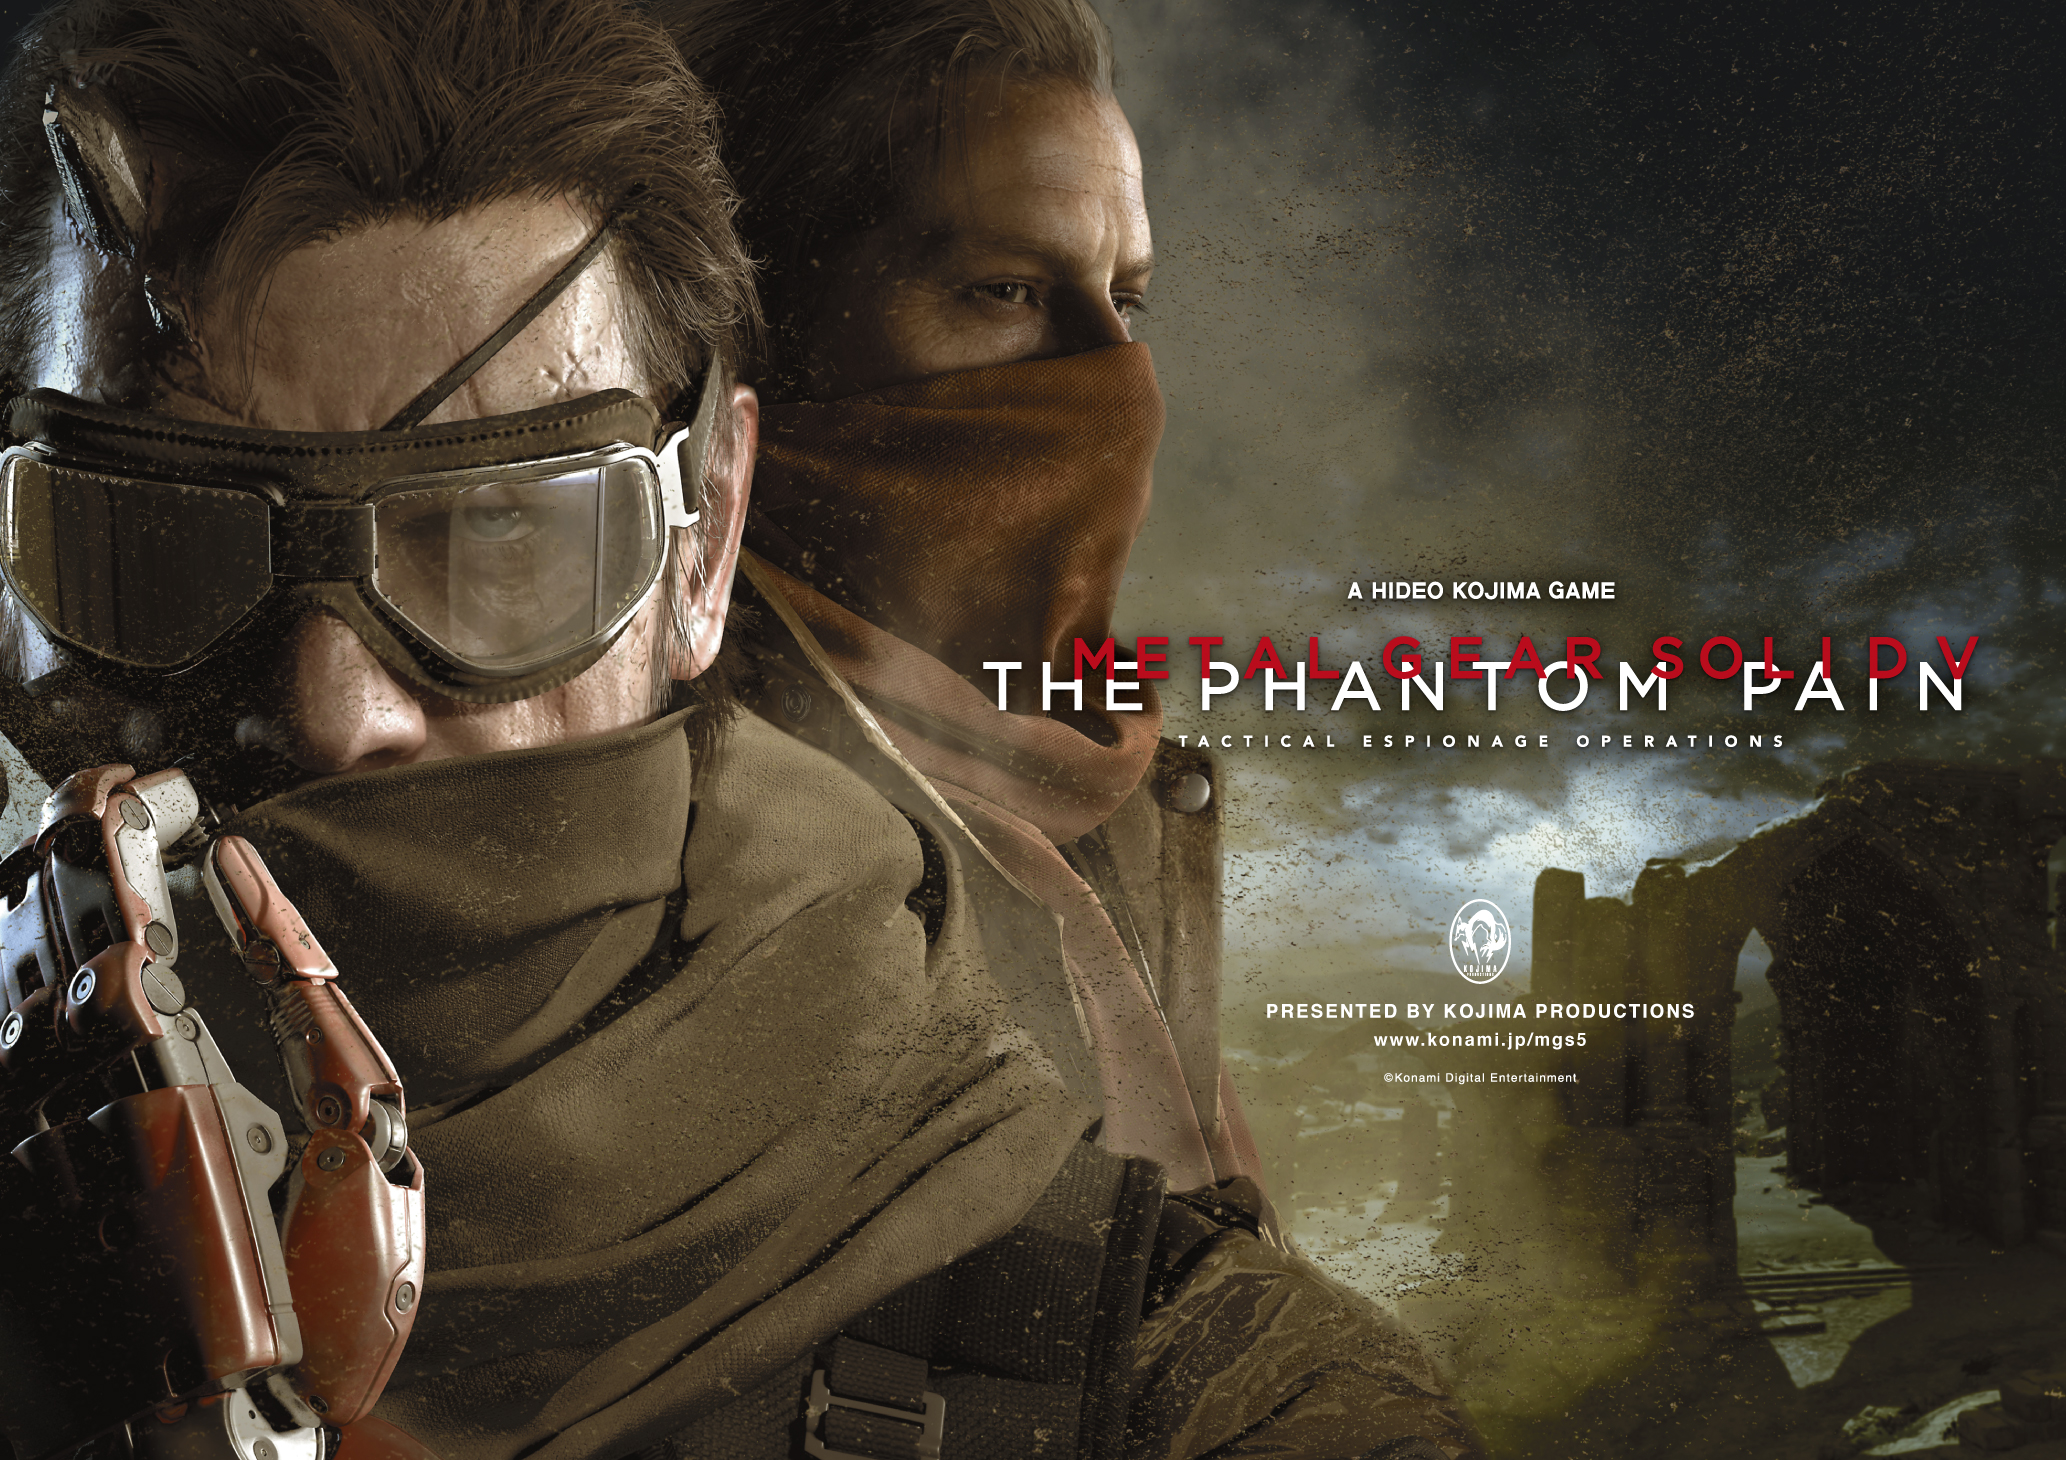 video game, metal gear solid v: the phantom pain, metal gear solid